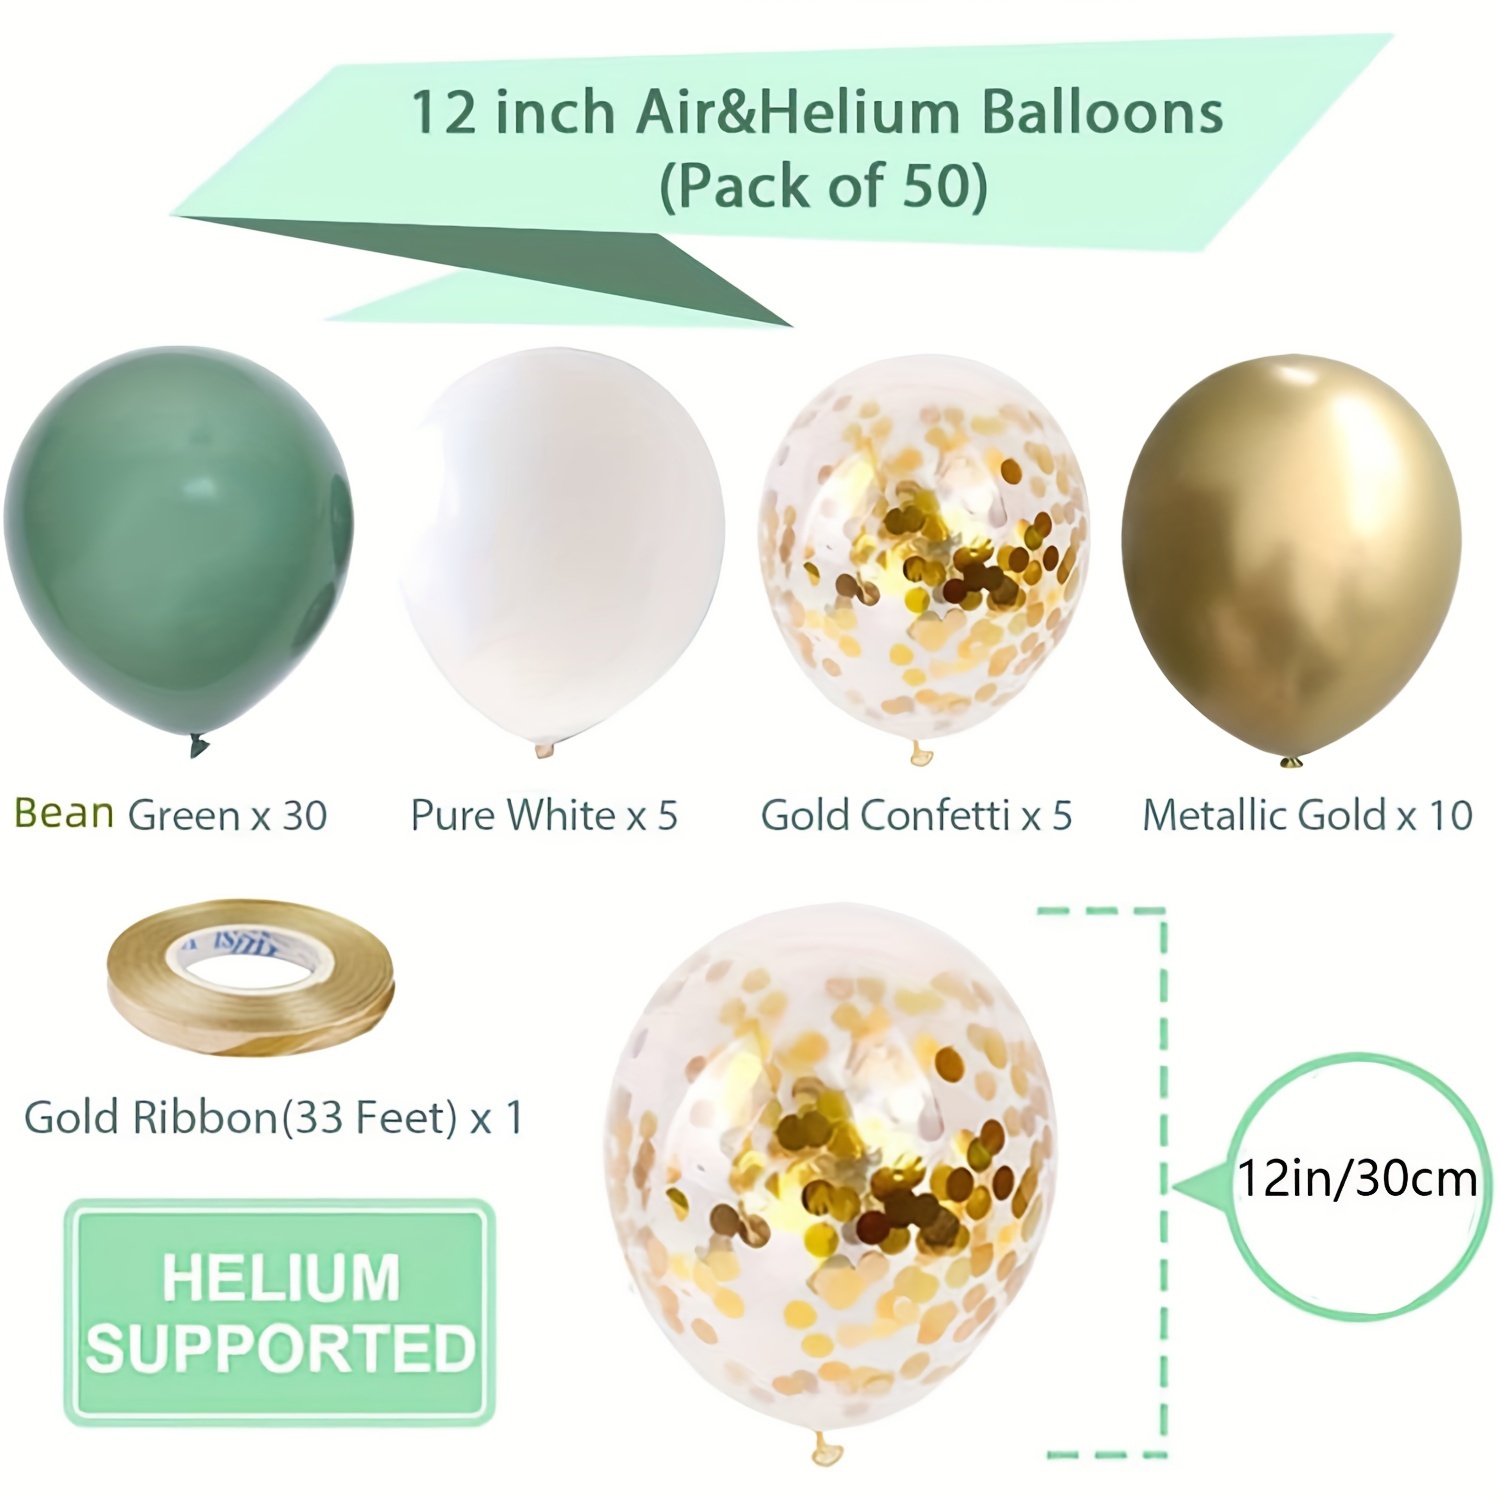 10 x ballons métalliques dorés, Ballons confettis